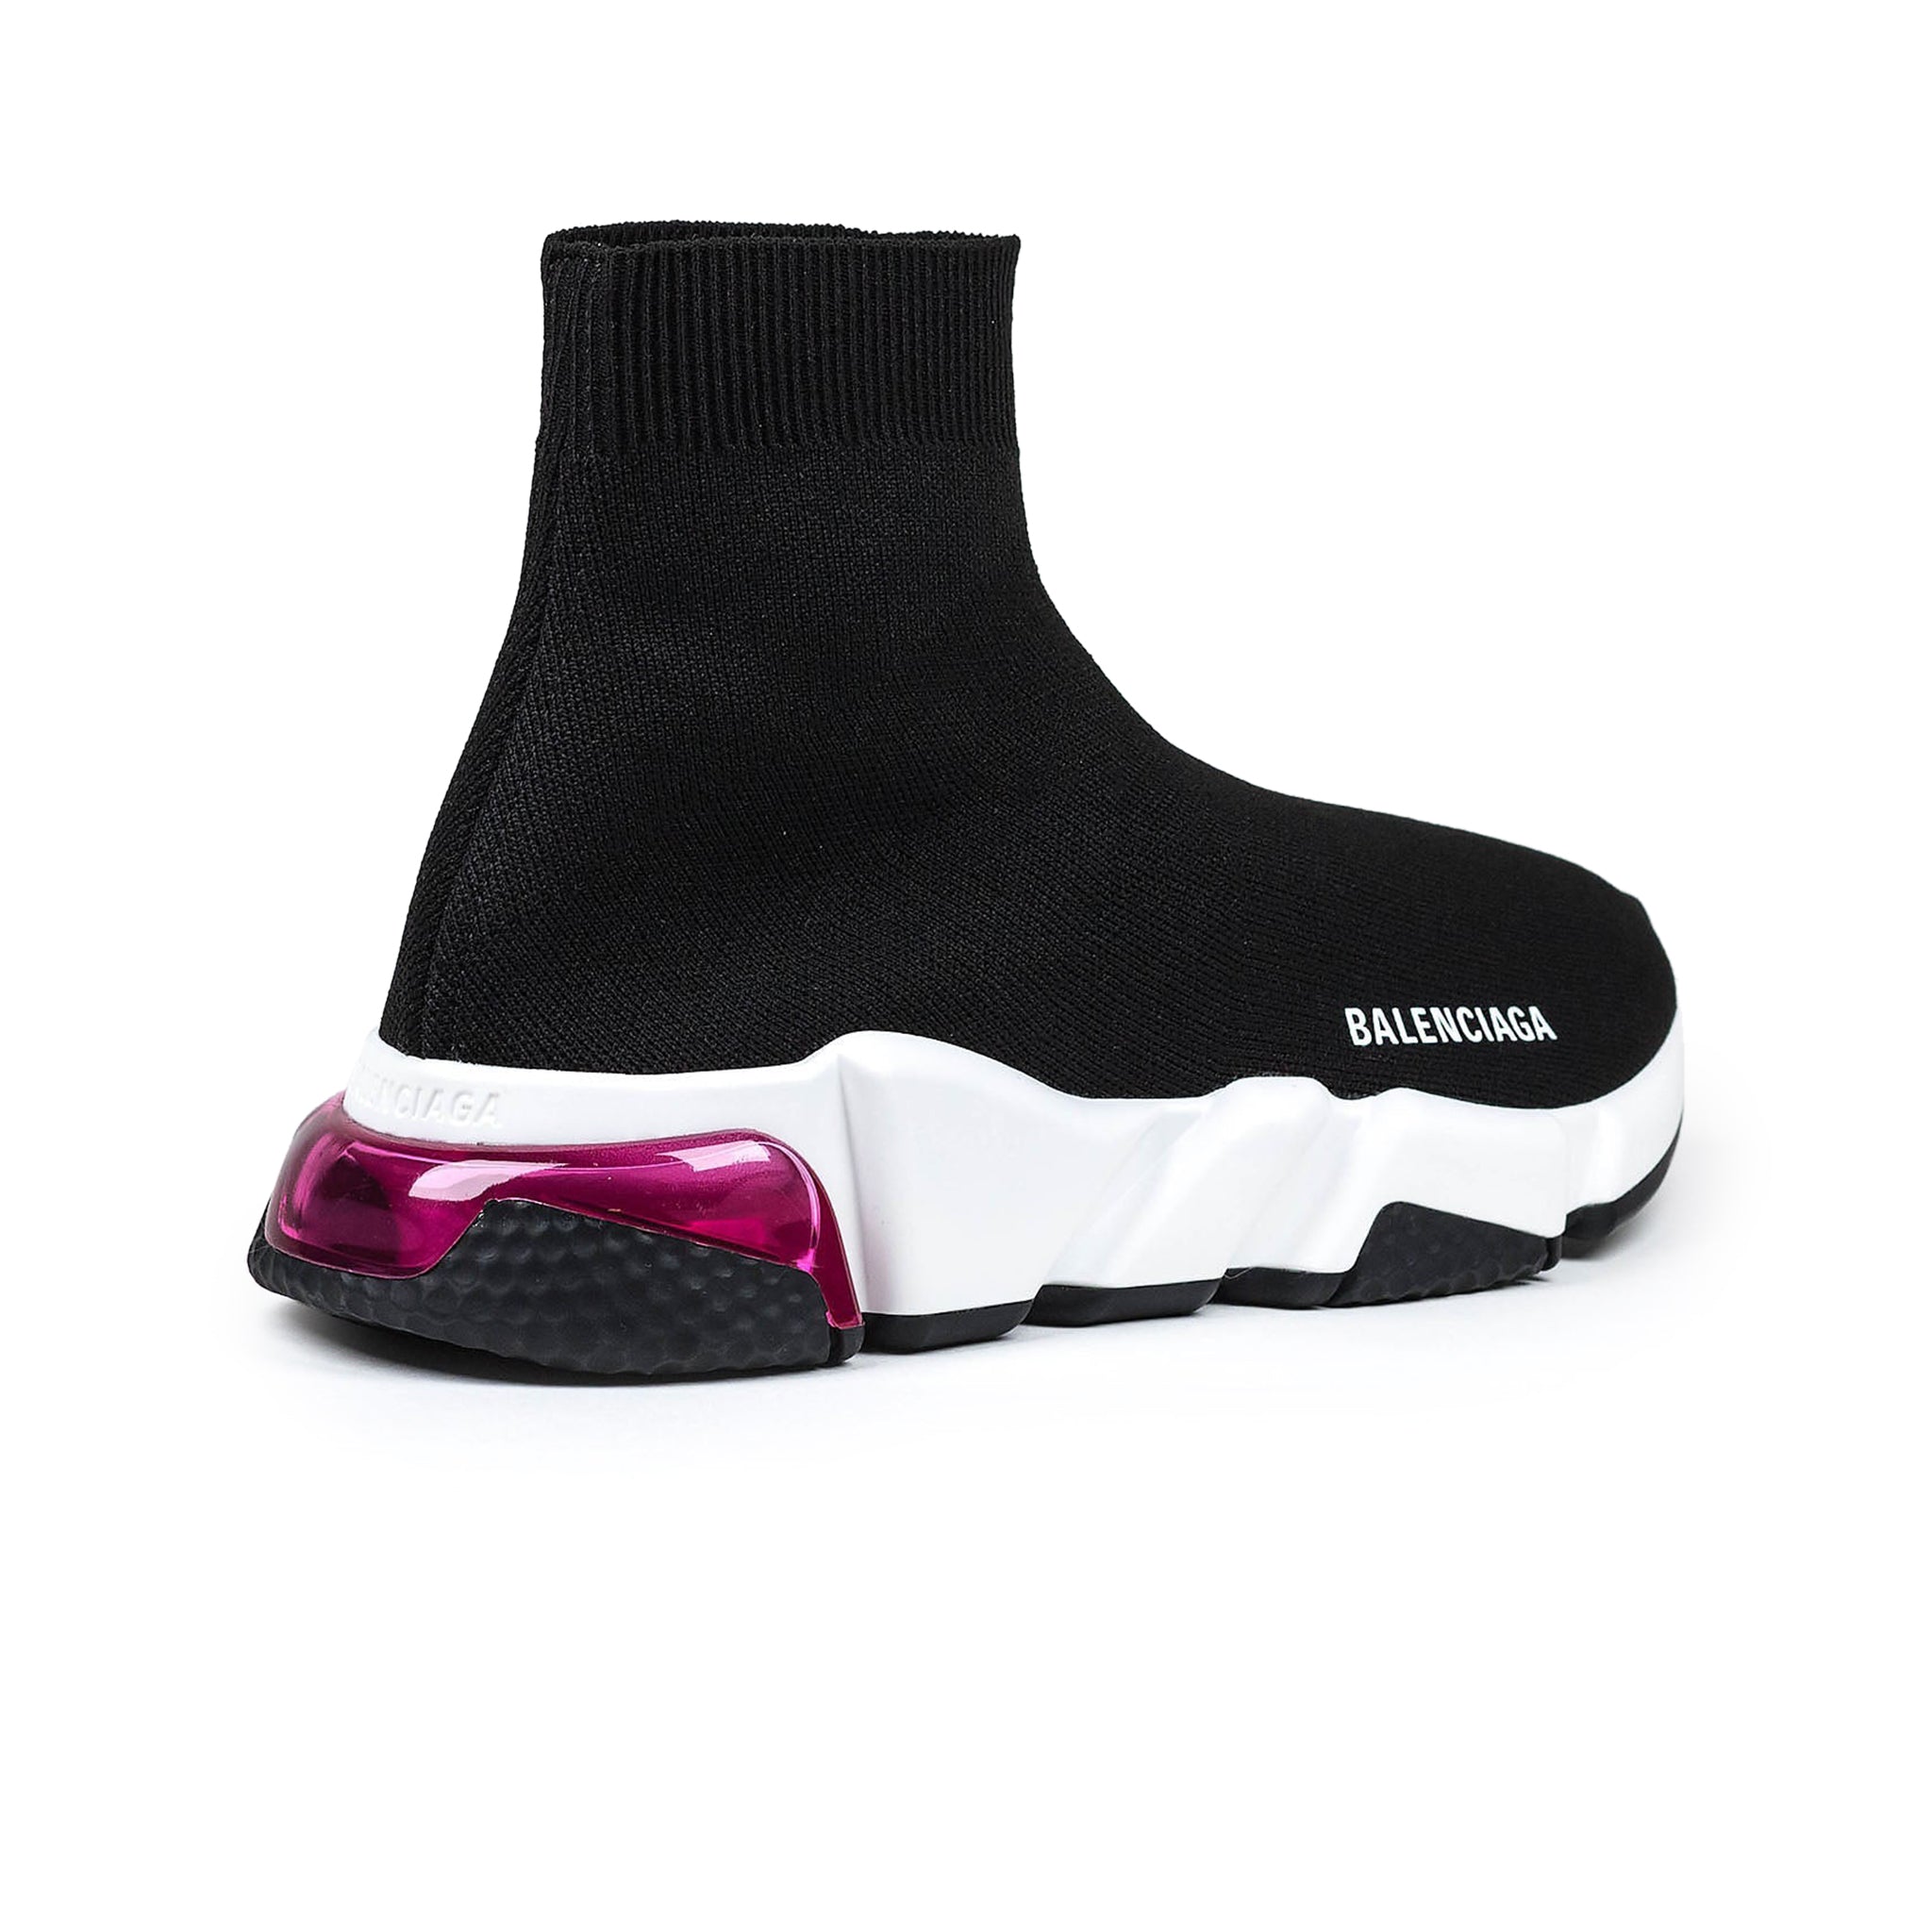 Balenciaga  Shoes  Balenciaga Pink Stretch Knit Sock Speed 2 Flat  Sneakers Shoe Size 38 8  Poshmark